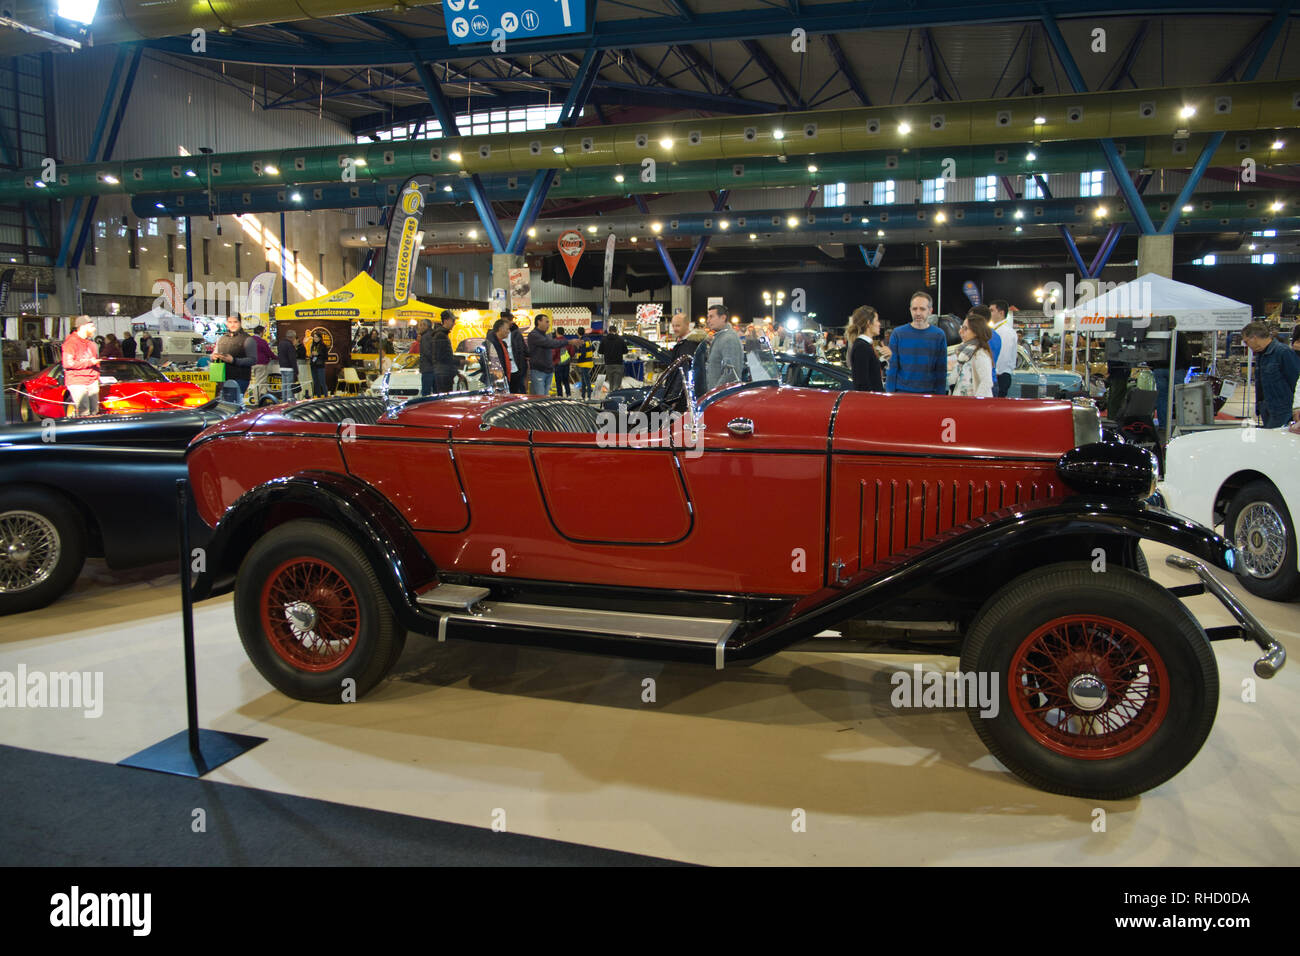 1927 FN Automobile (Fabrique nationale). Retrò Málaga 2019. Spagna. Foto Stock